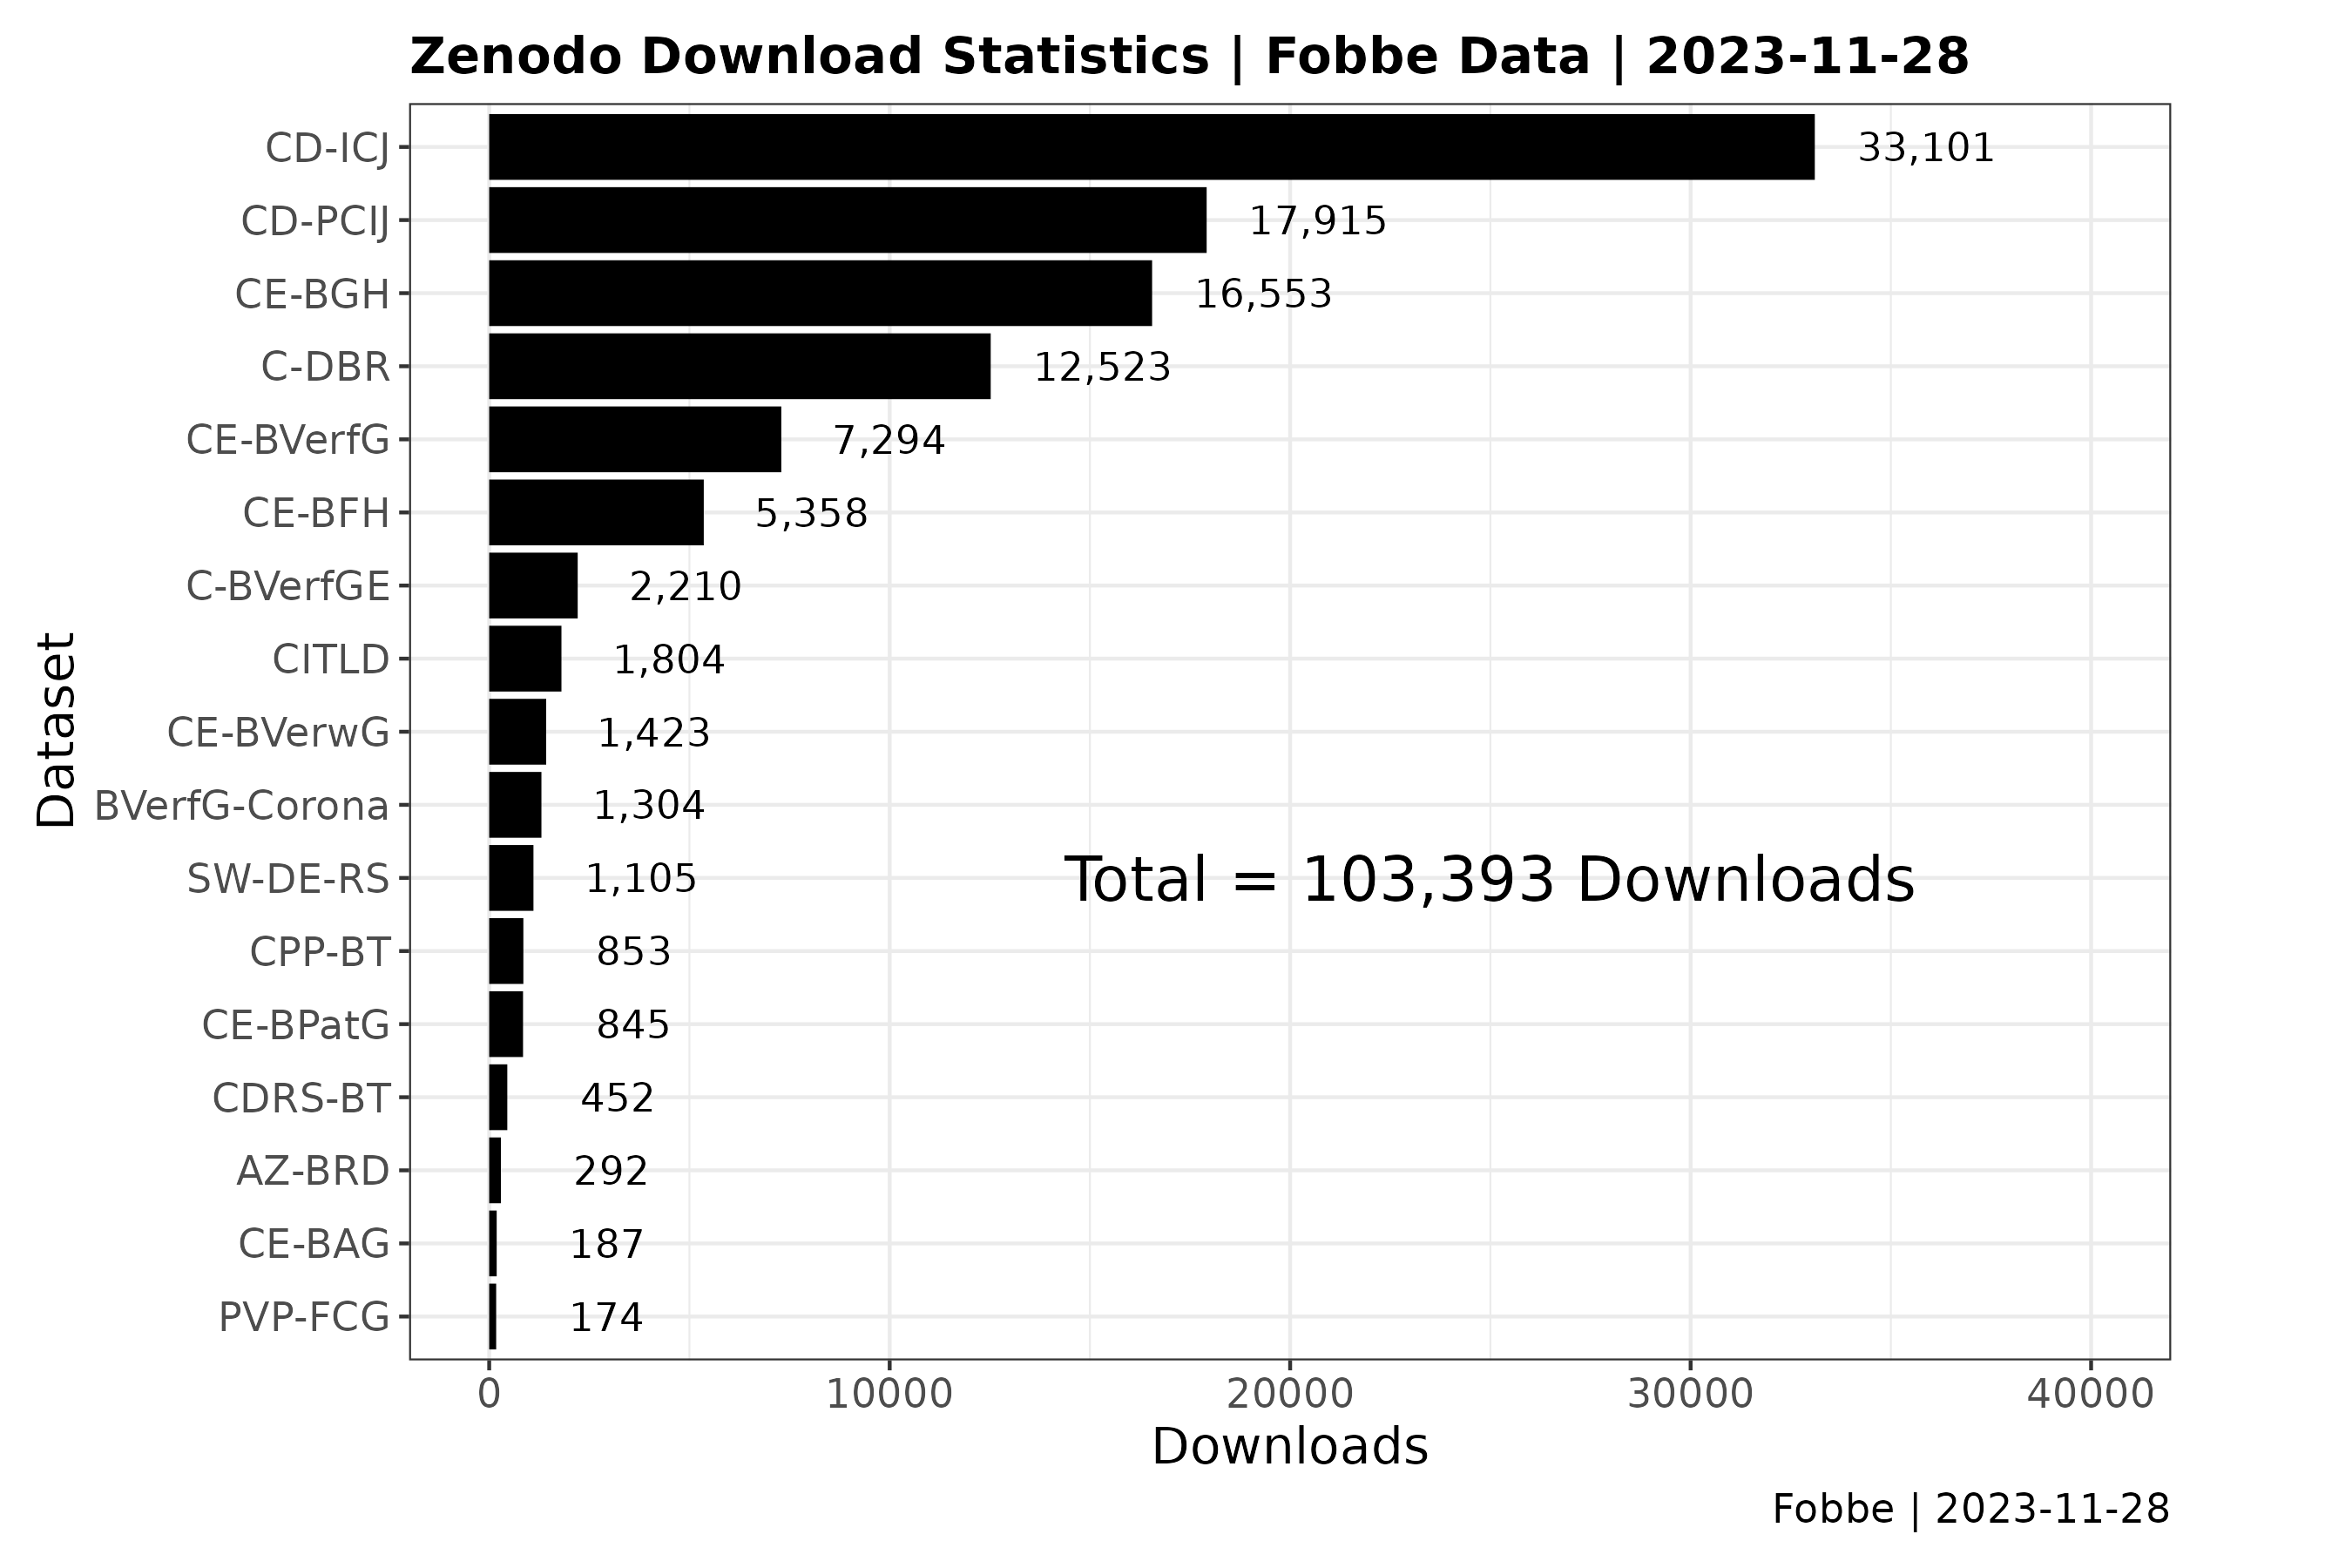 Zenodo Fobbe Download Statistics